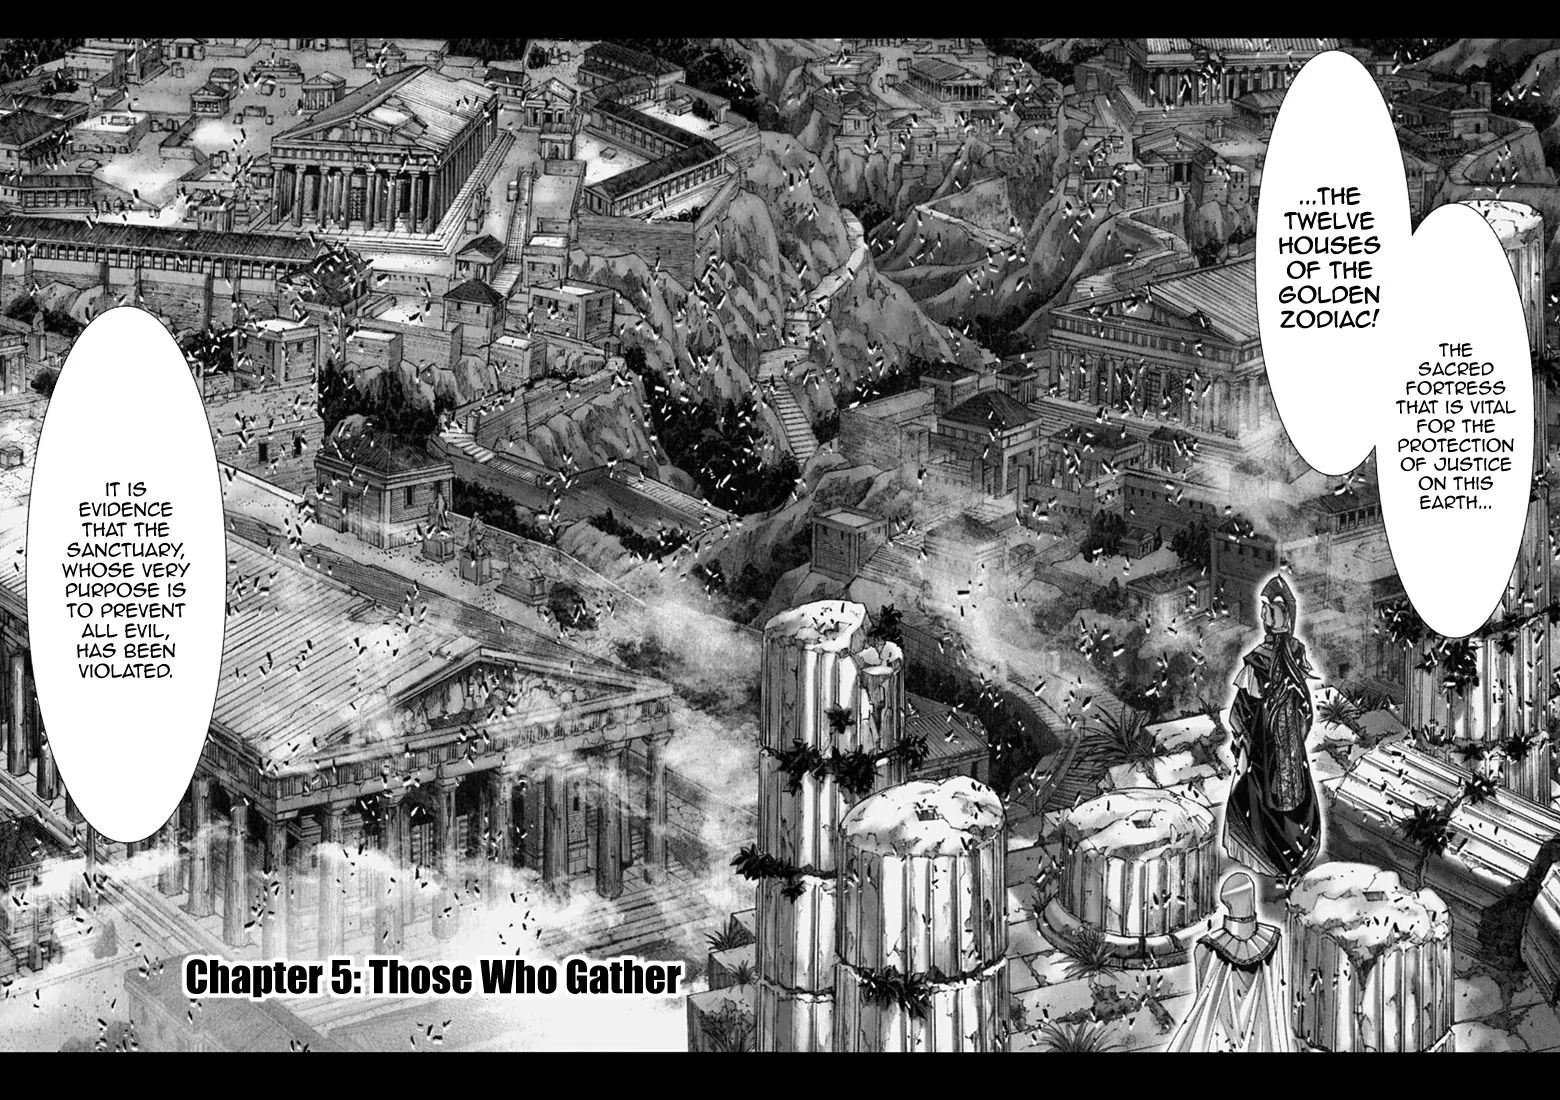 Saint Seiya Episode.g - Page 2